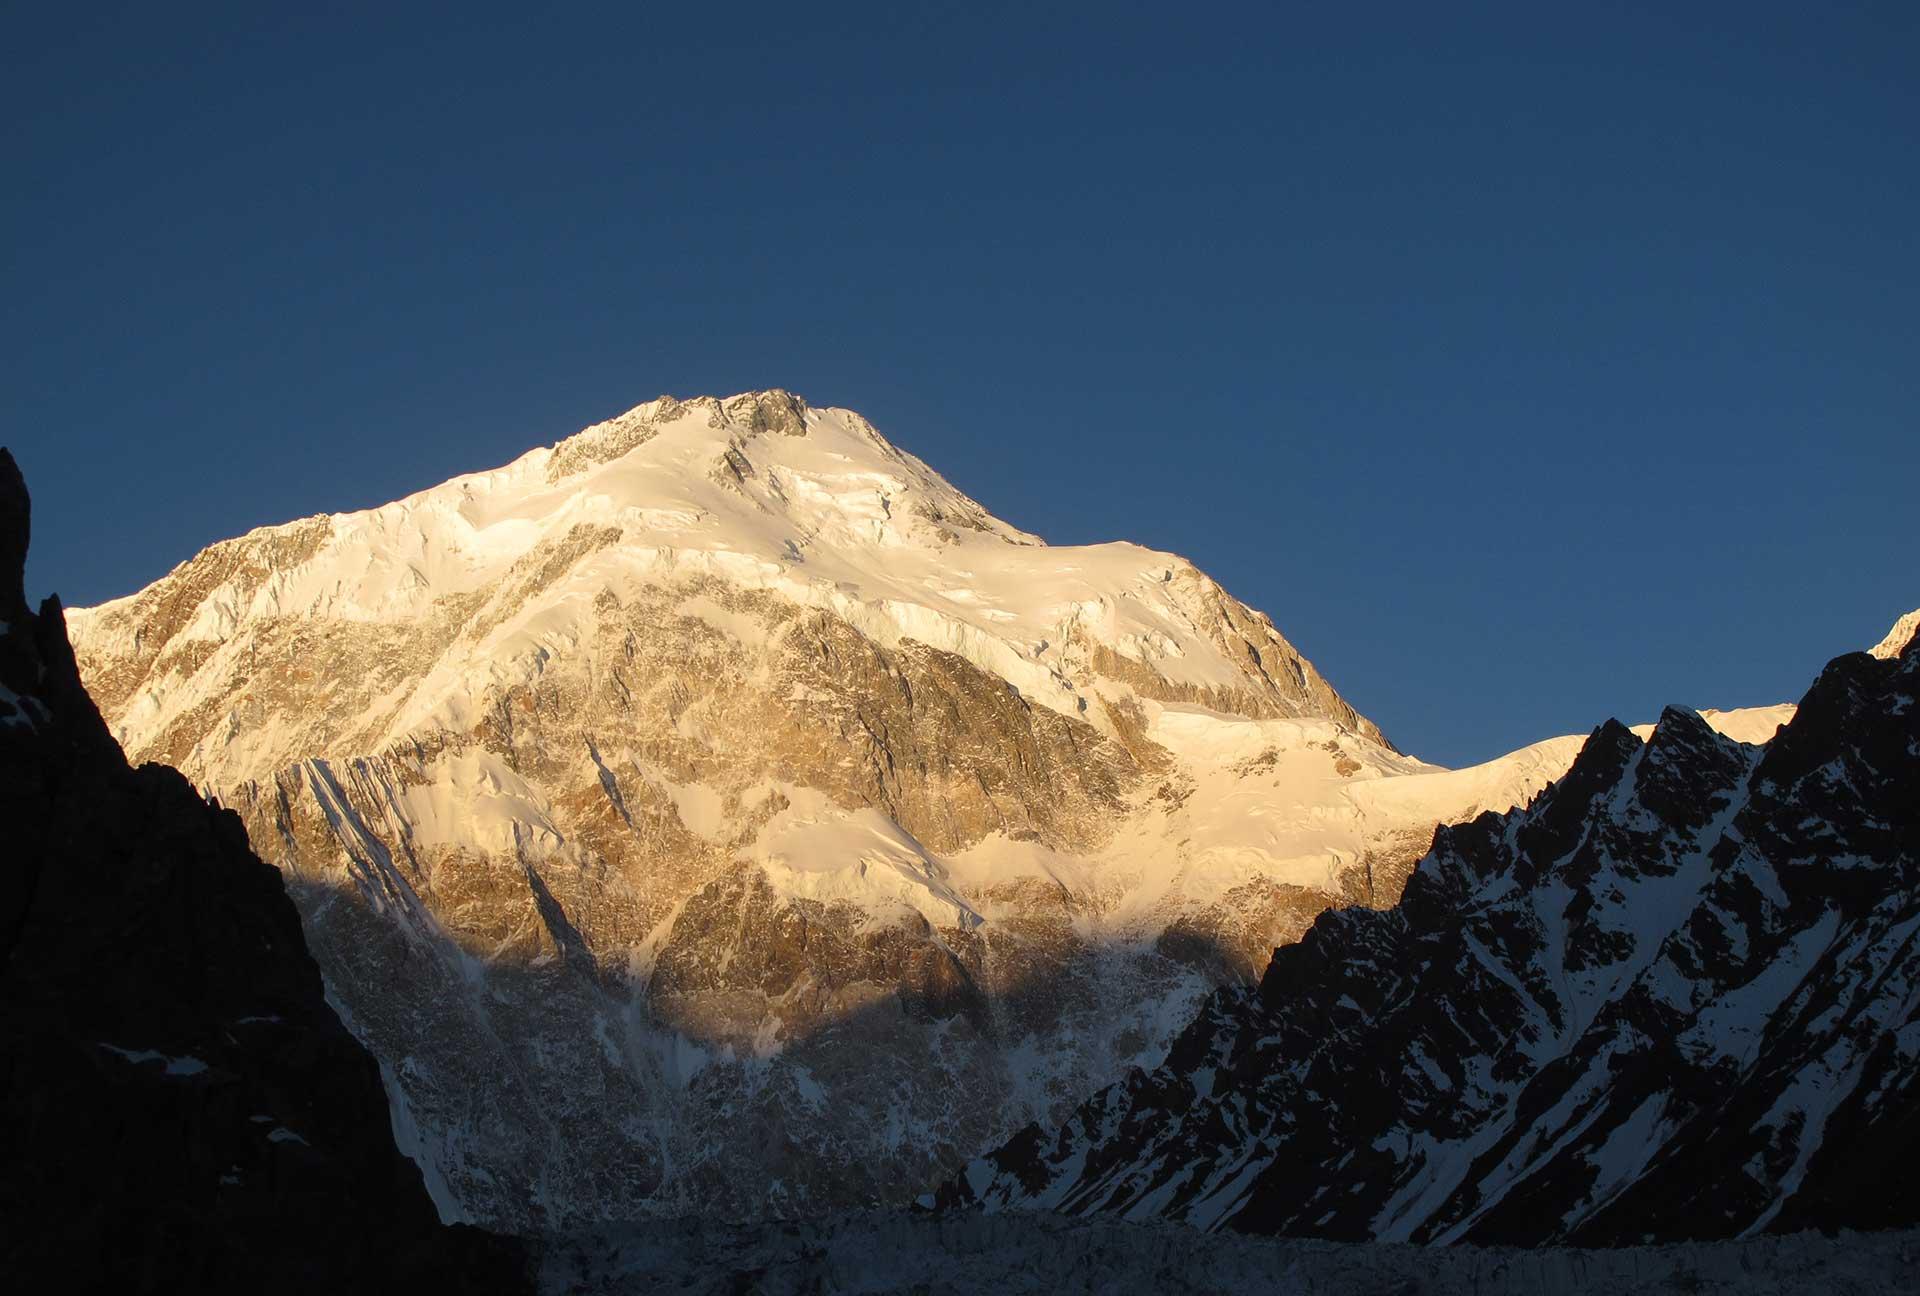 Mt. Gasherbrum I Expedition